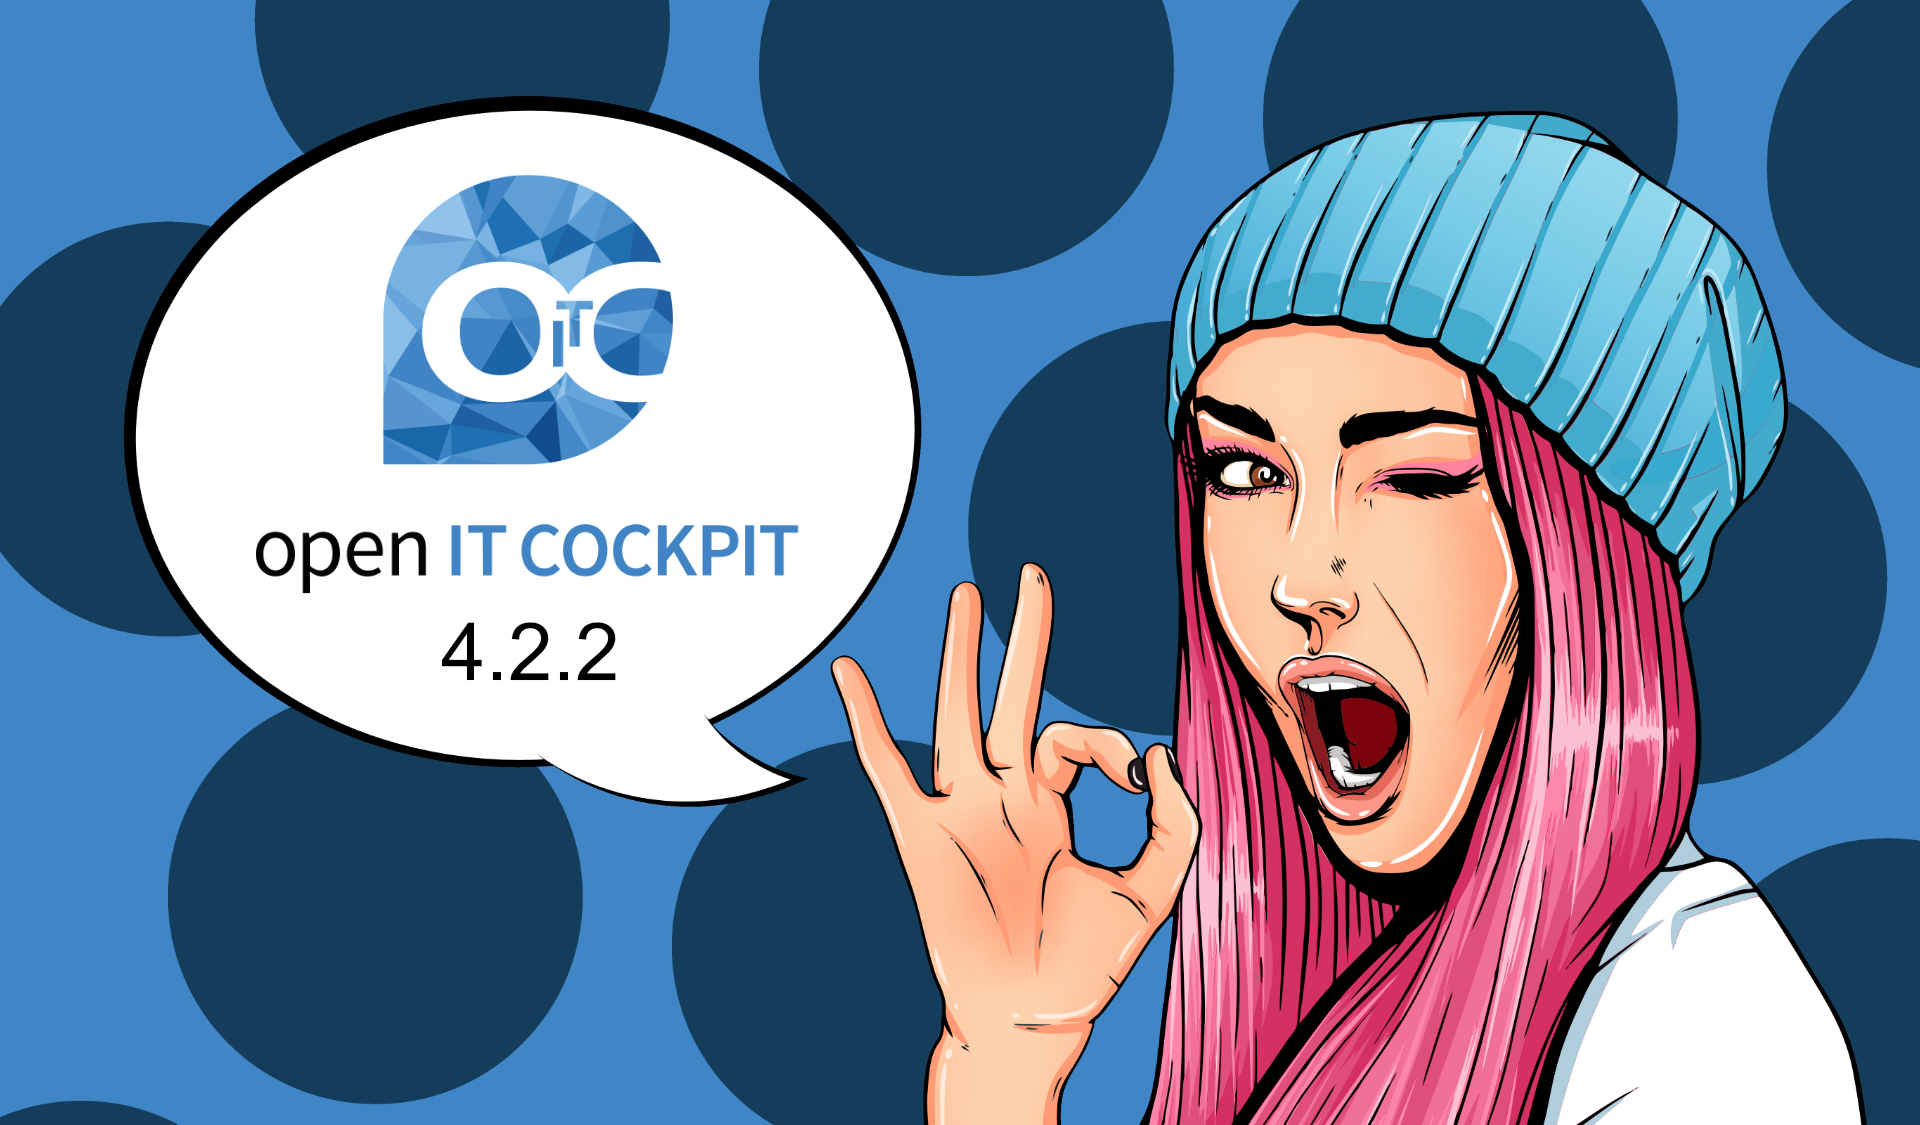 openITCOCKPIT 4.2.2 has been released